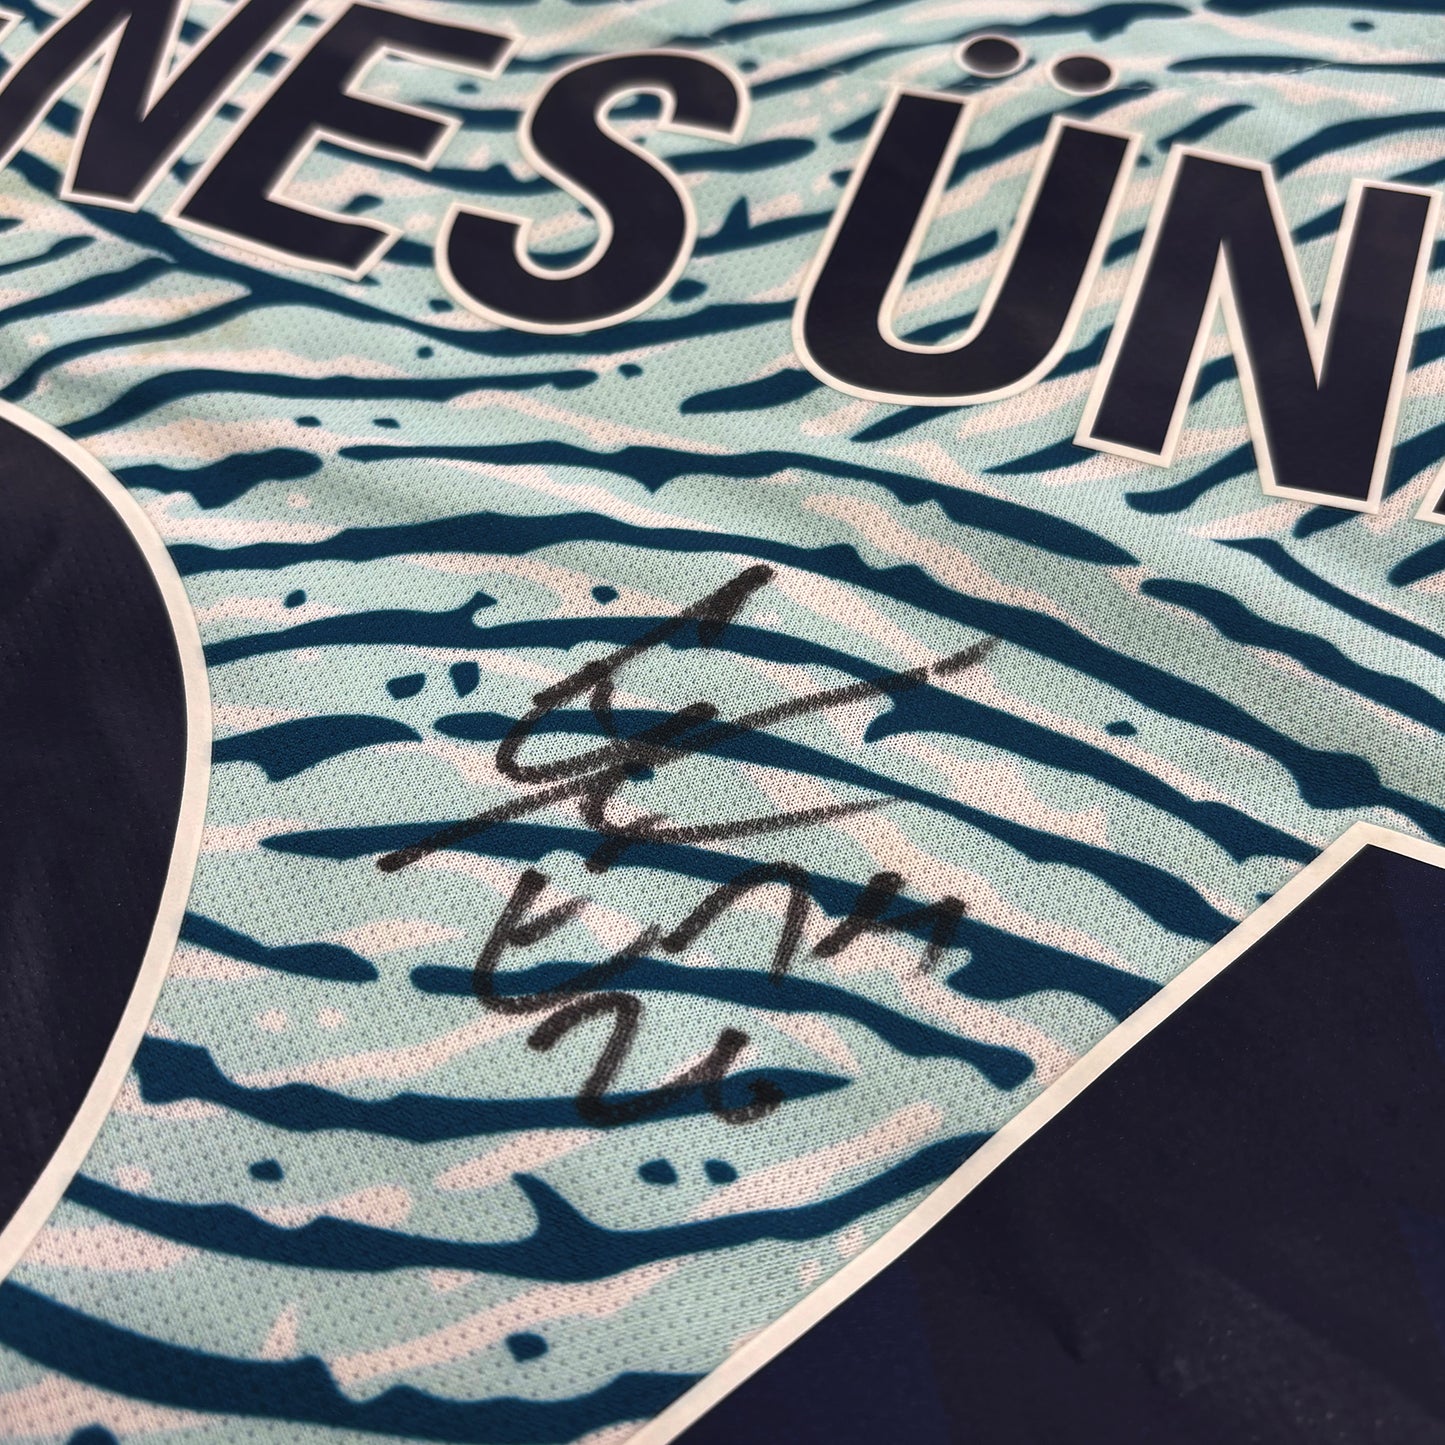 Enes Ünal Signed Premier League Shirt - Newcastle United 23/24